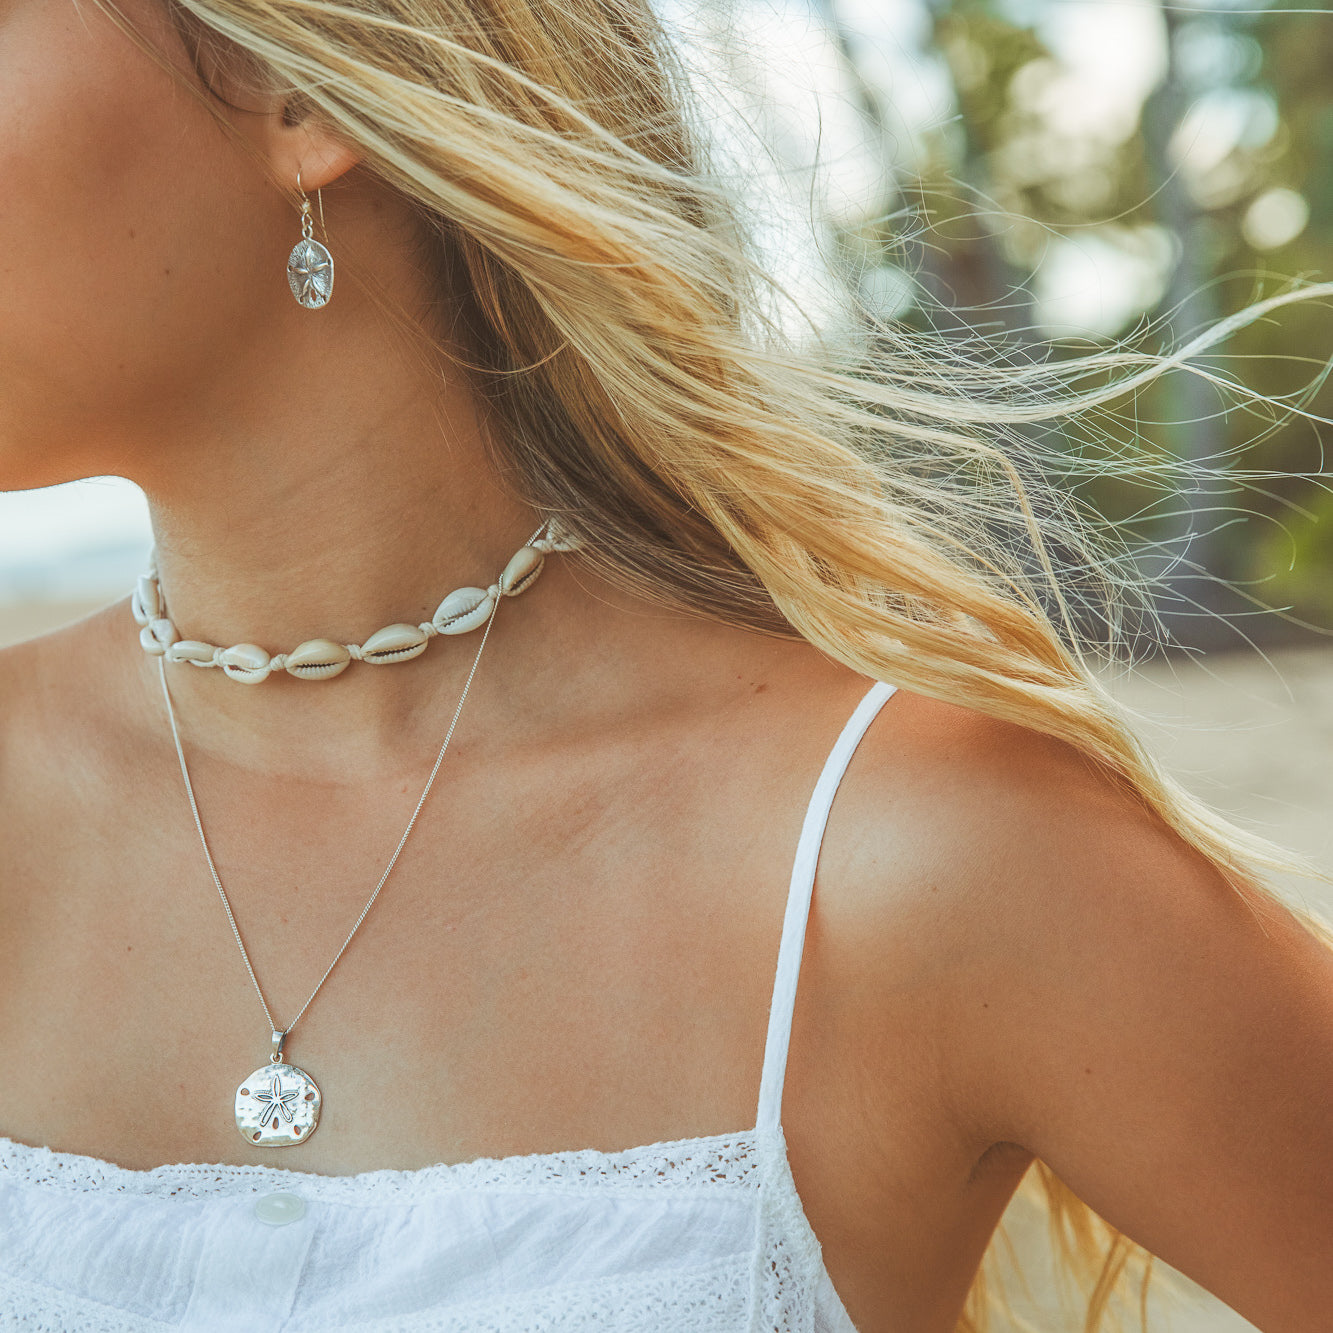 Sand dollar necklace – Beach Kandi